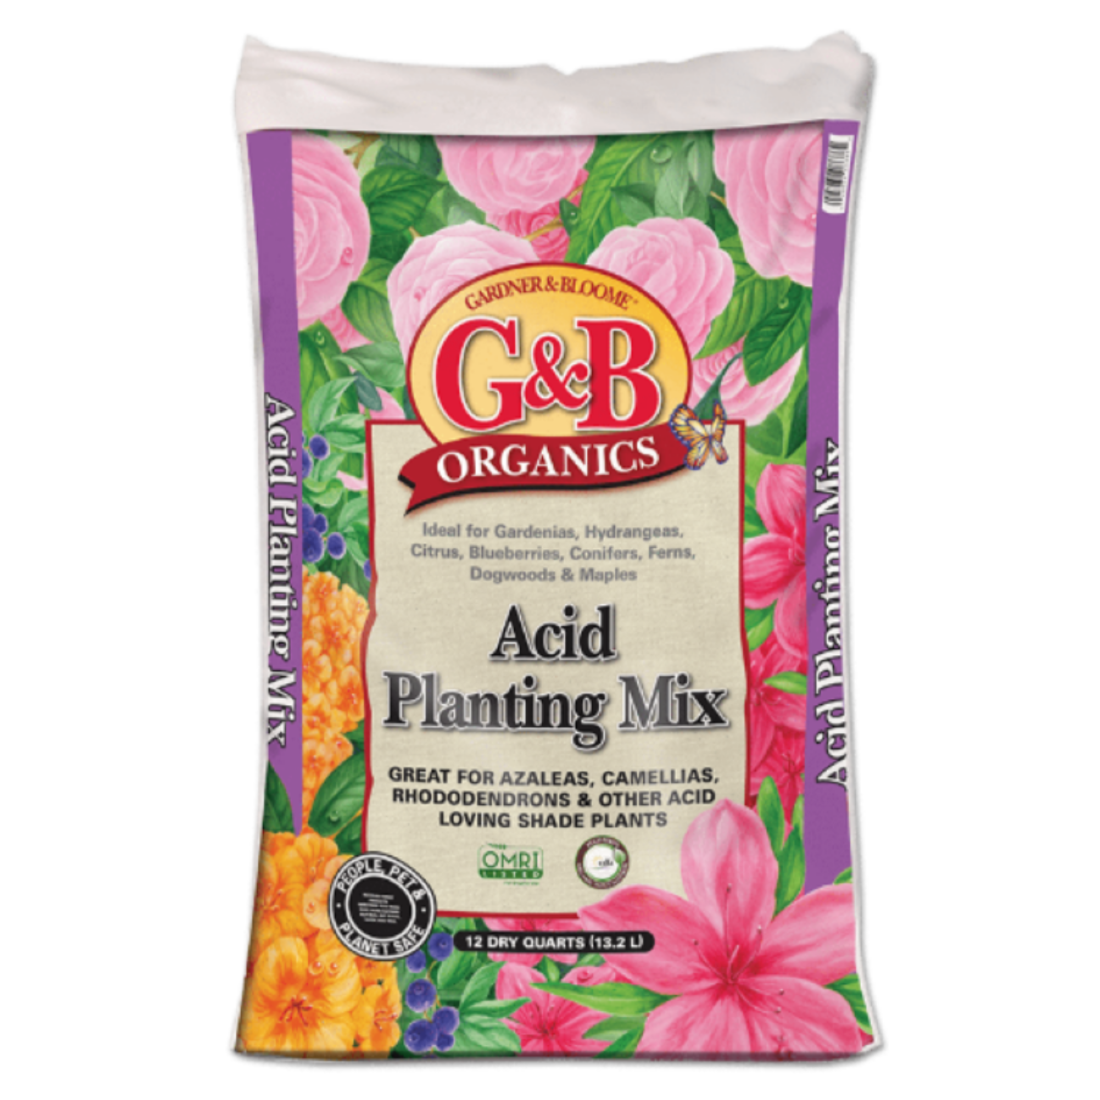 Acid Planting Mix (2 cu. ft. bag) (7890236244223)